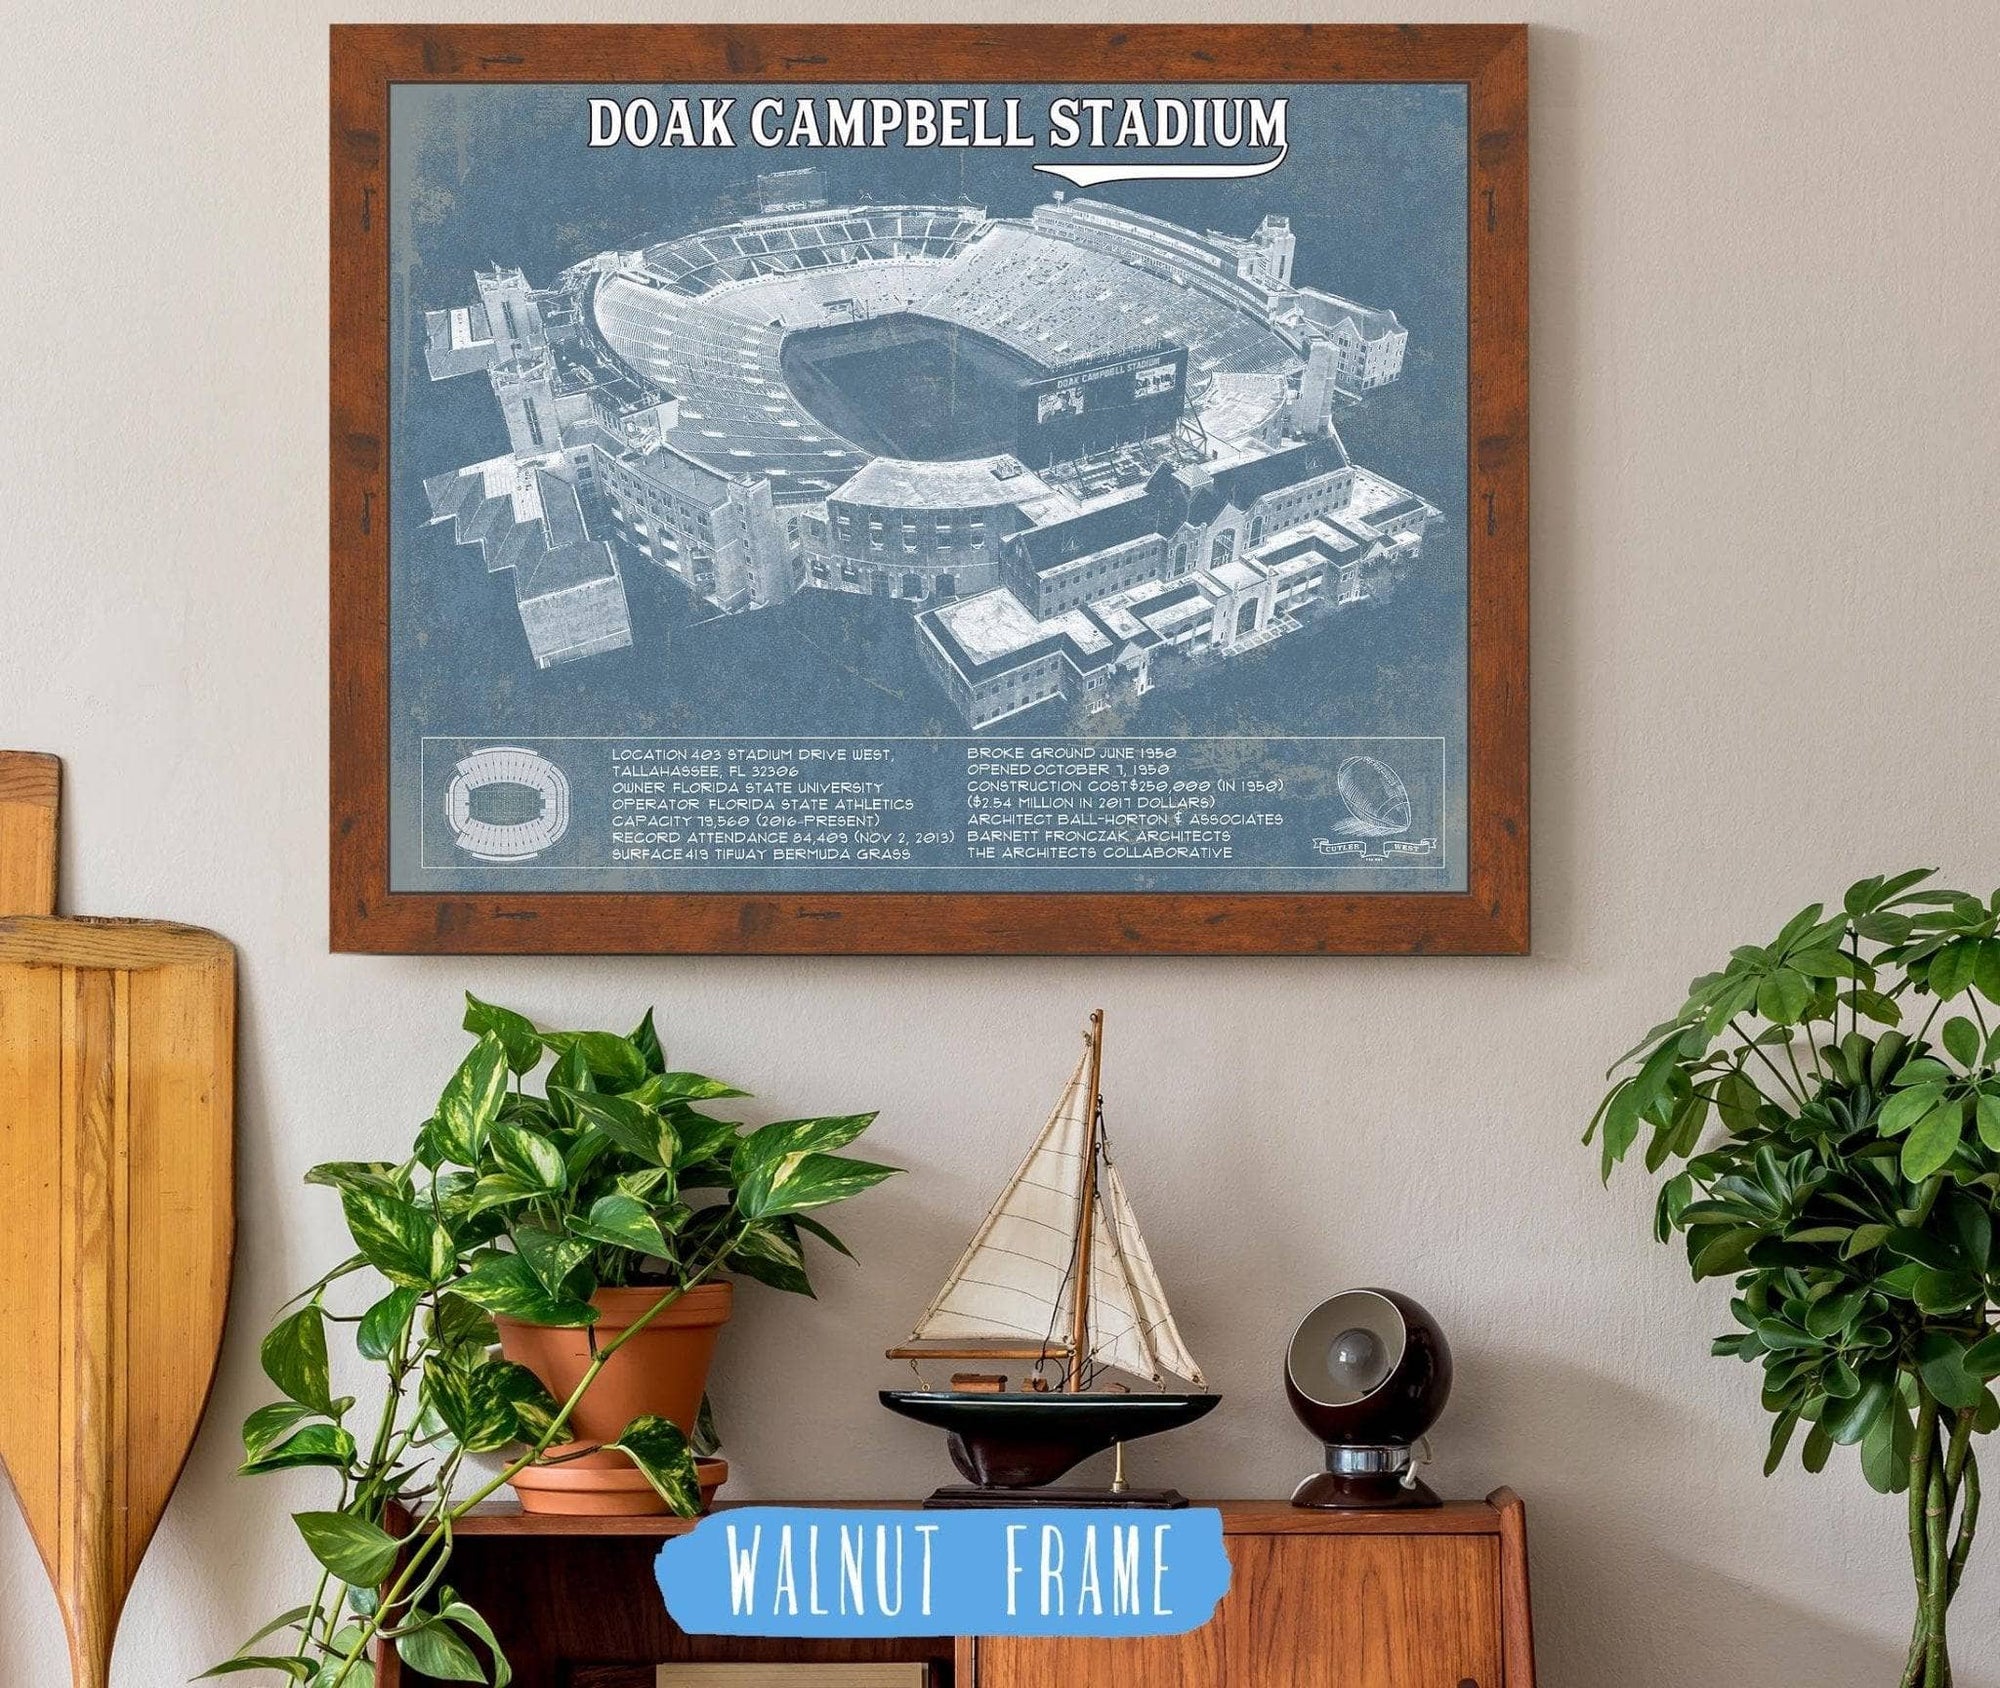 Cutler West College Football Collection 14" x 11" / Walnut Frame Florida State Seminoles Doak Campbell Stadium Vintage FSU College Football Team Color Art Print 933350148_55208